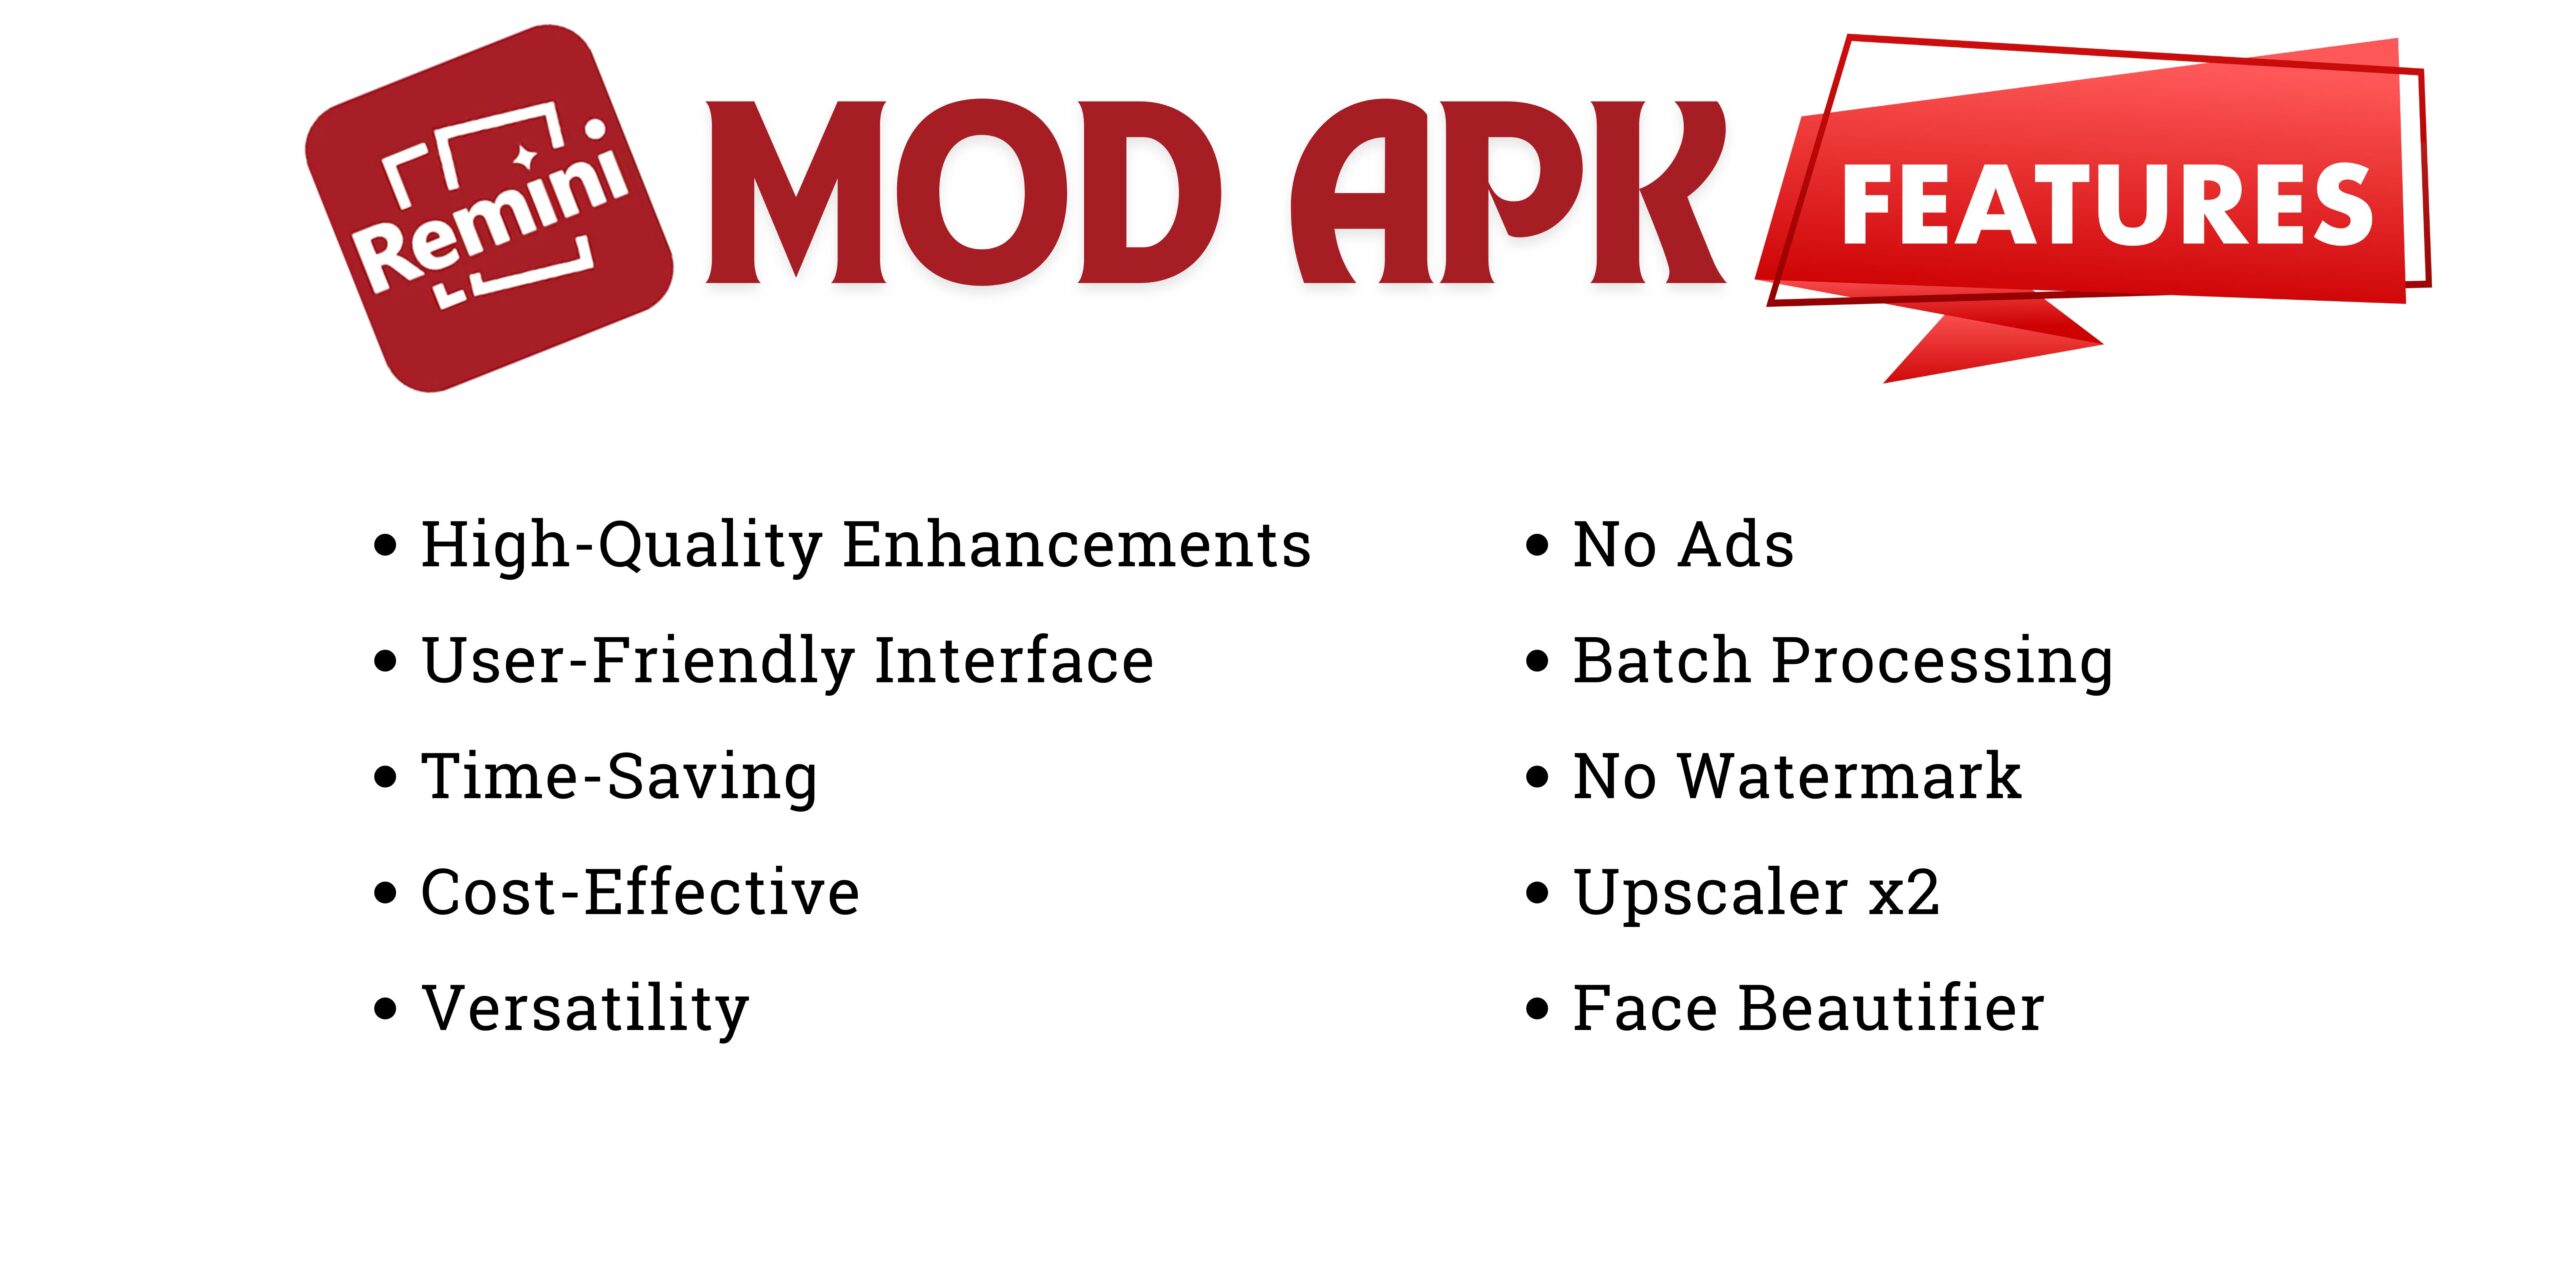 Remini Mod APK Features